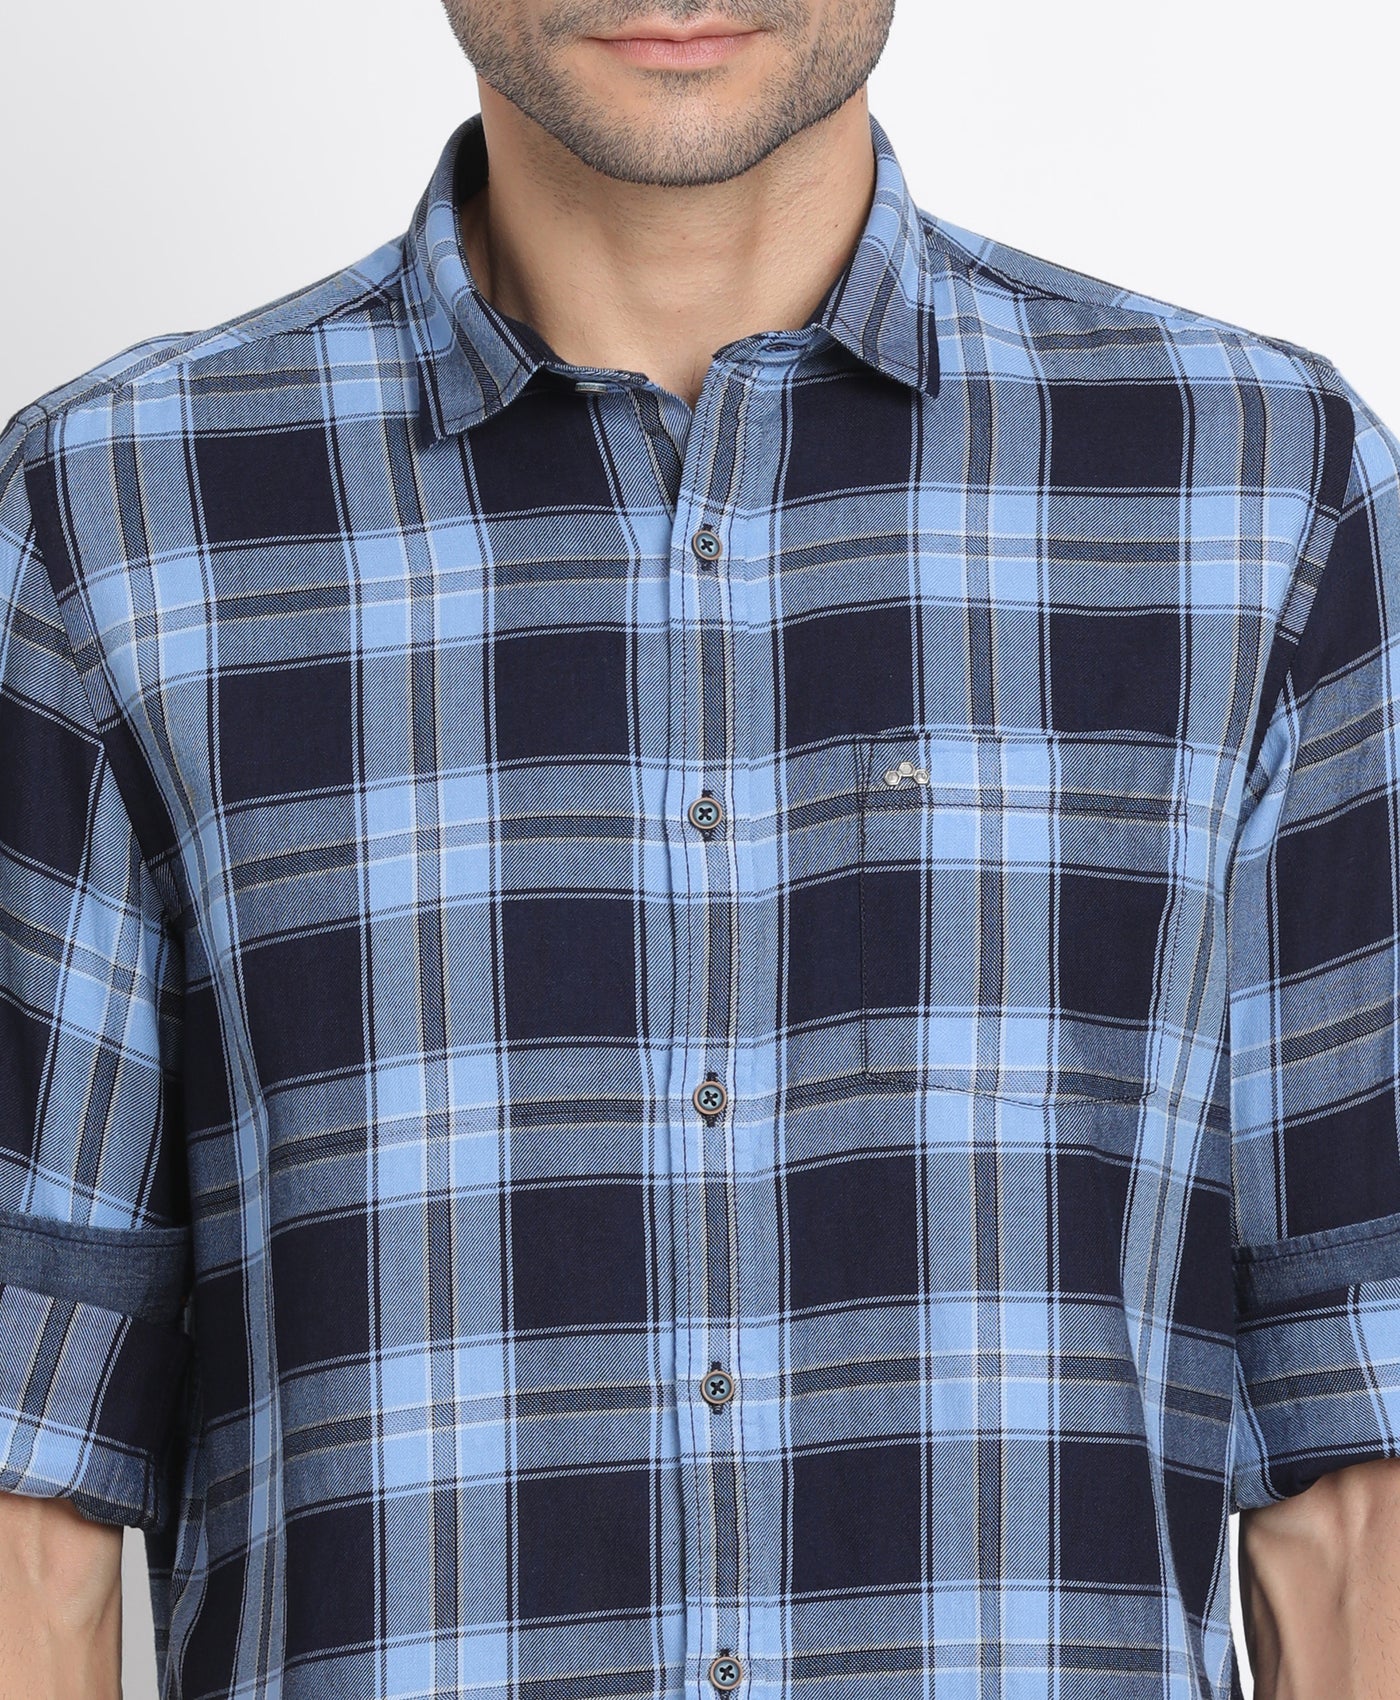 100% Cotton Indigo Navy Blue Checkered Slim Fit Full Sleeve Casual Shirt